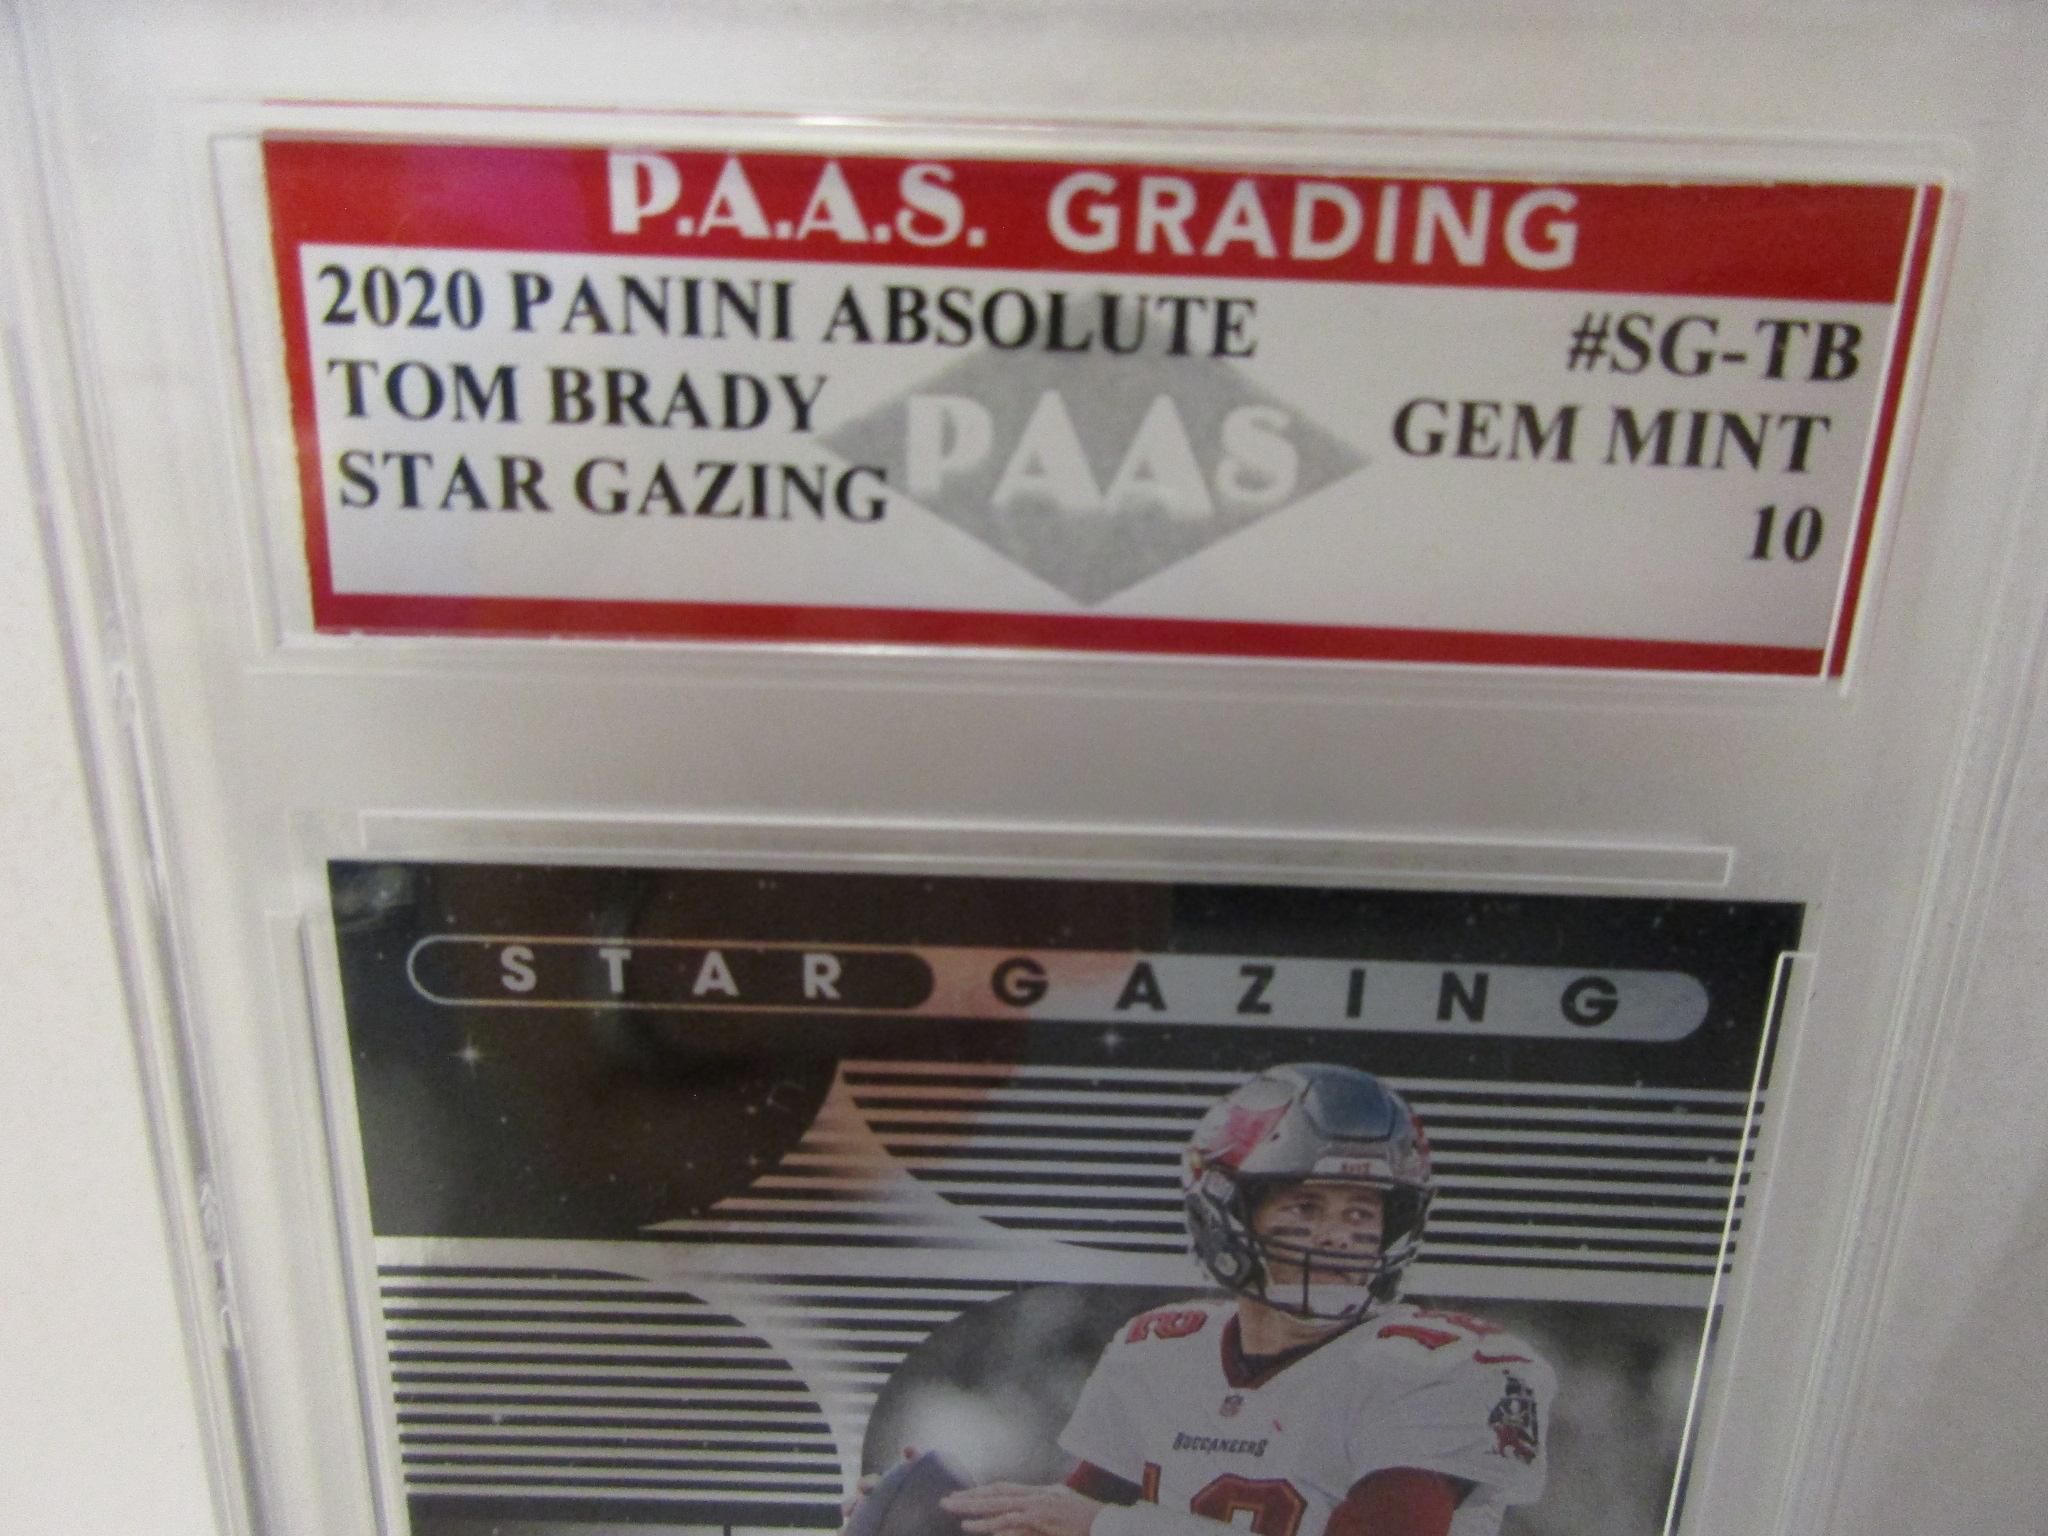 Tom Brady Buccaneers 2020 Panini Absolute Star Gazing #SG-TB graded PAAS Gem Mint 10